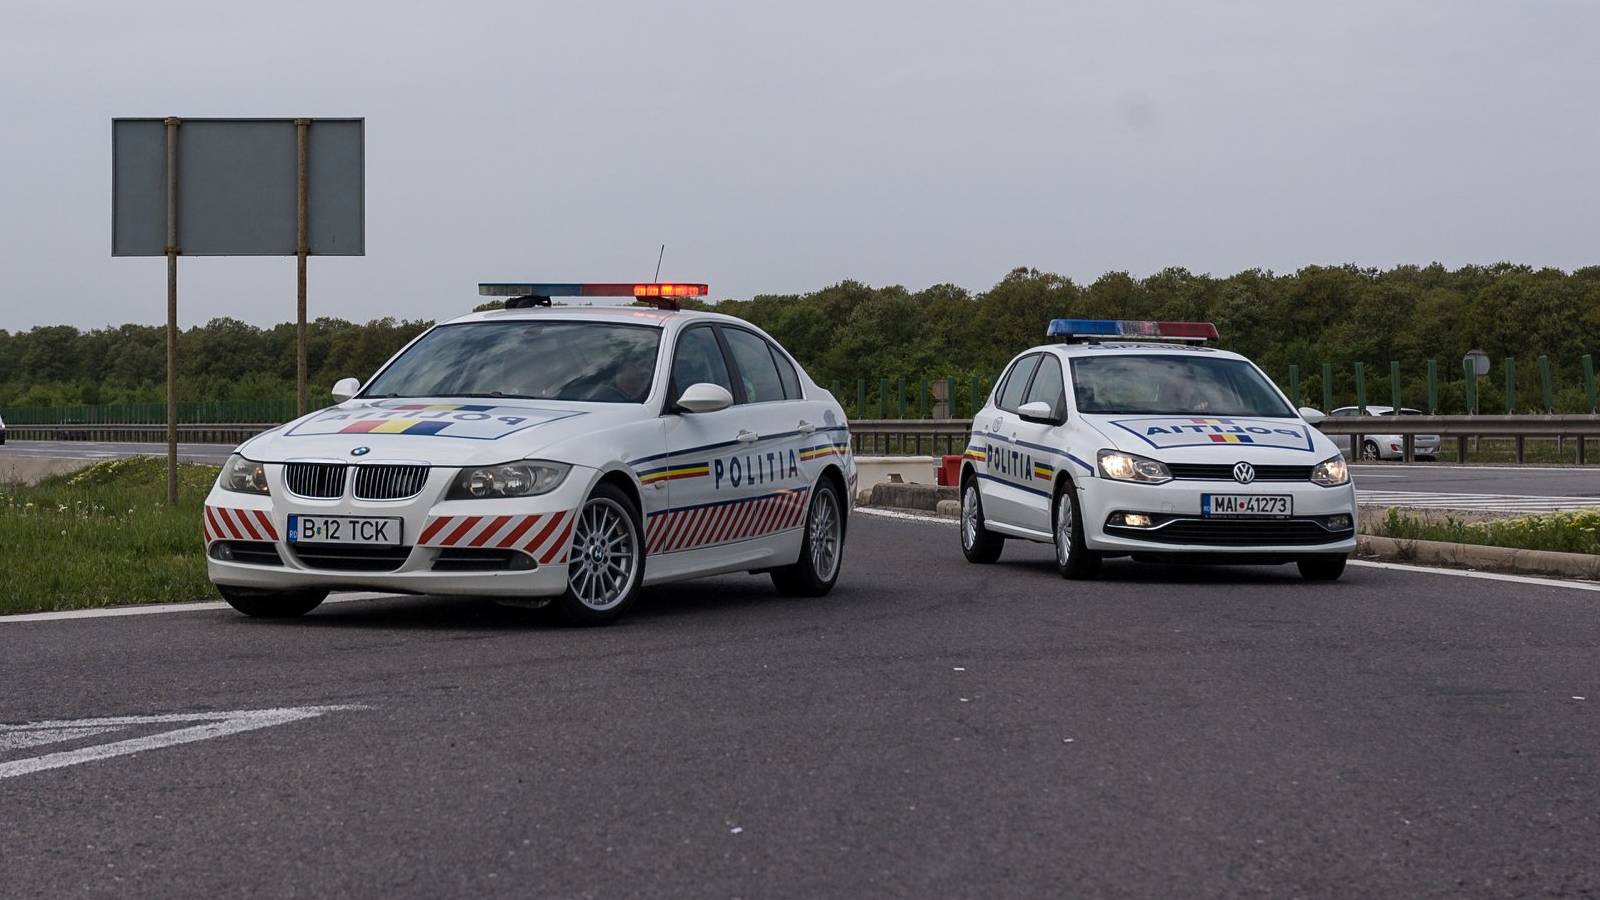 The Romanian Police warns traffic on public roads